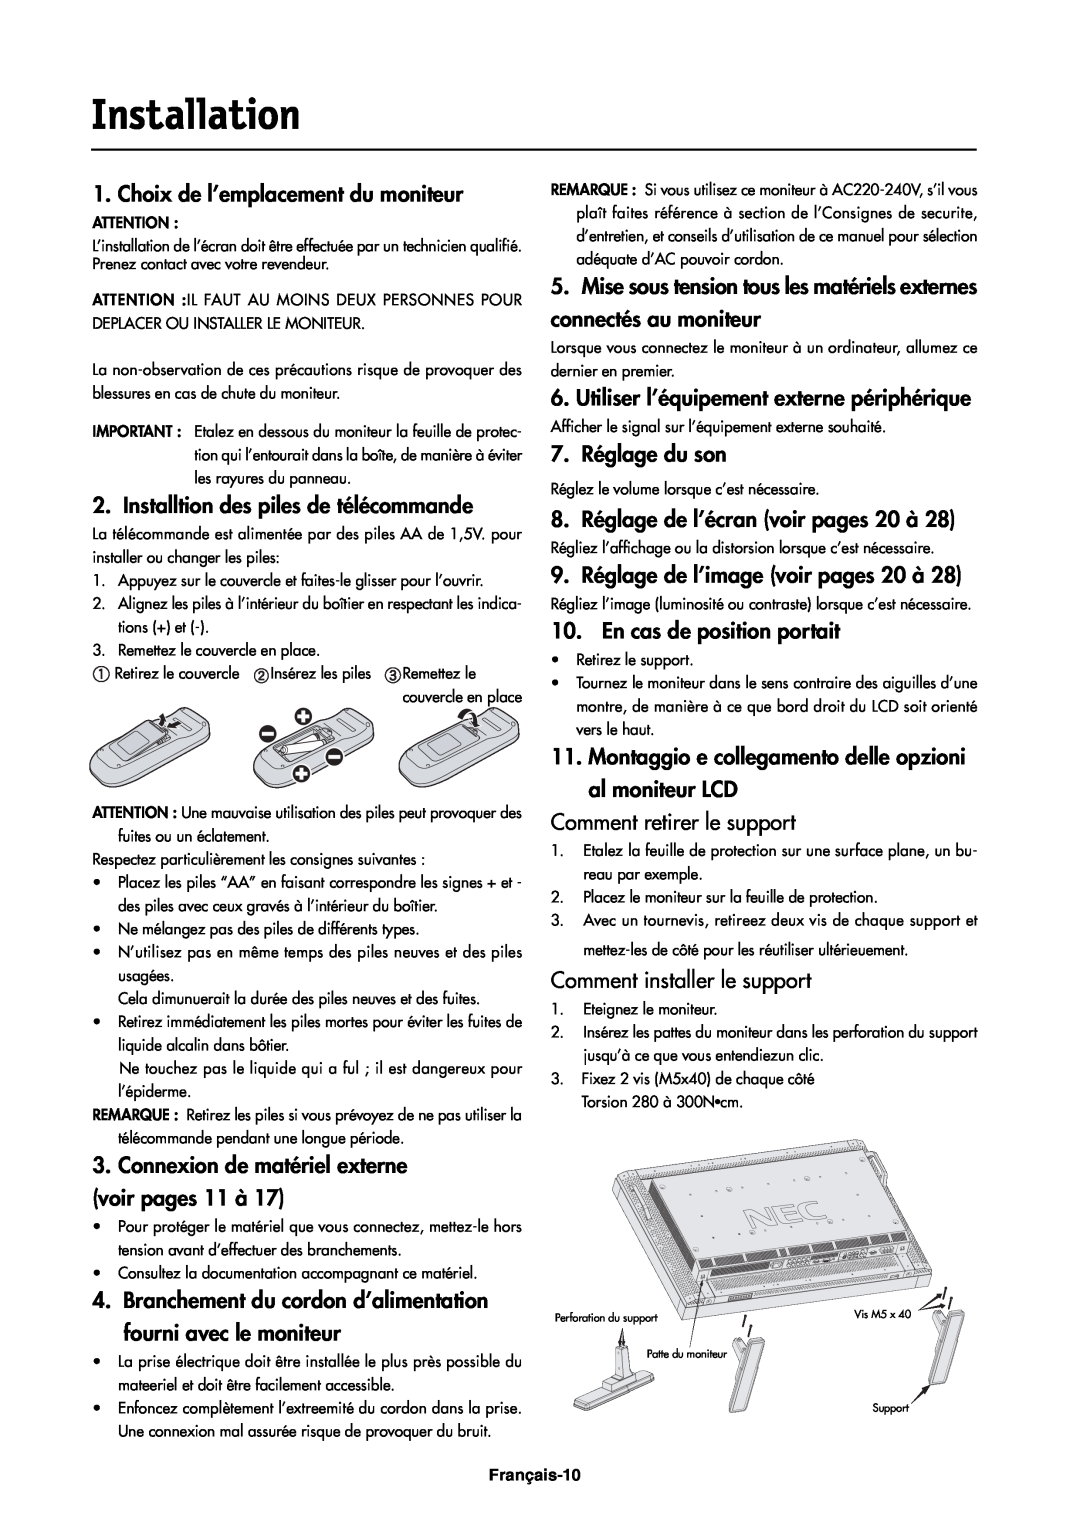 NEC LCD4000e manual Installation 